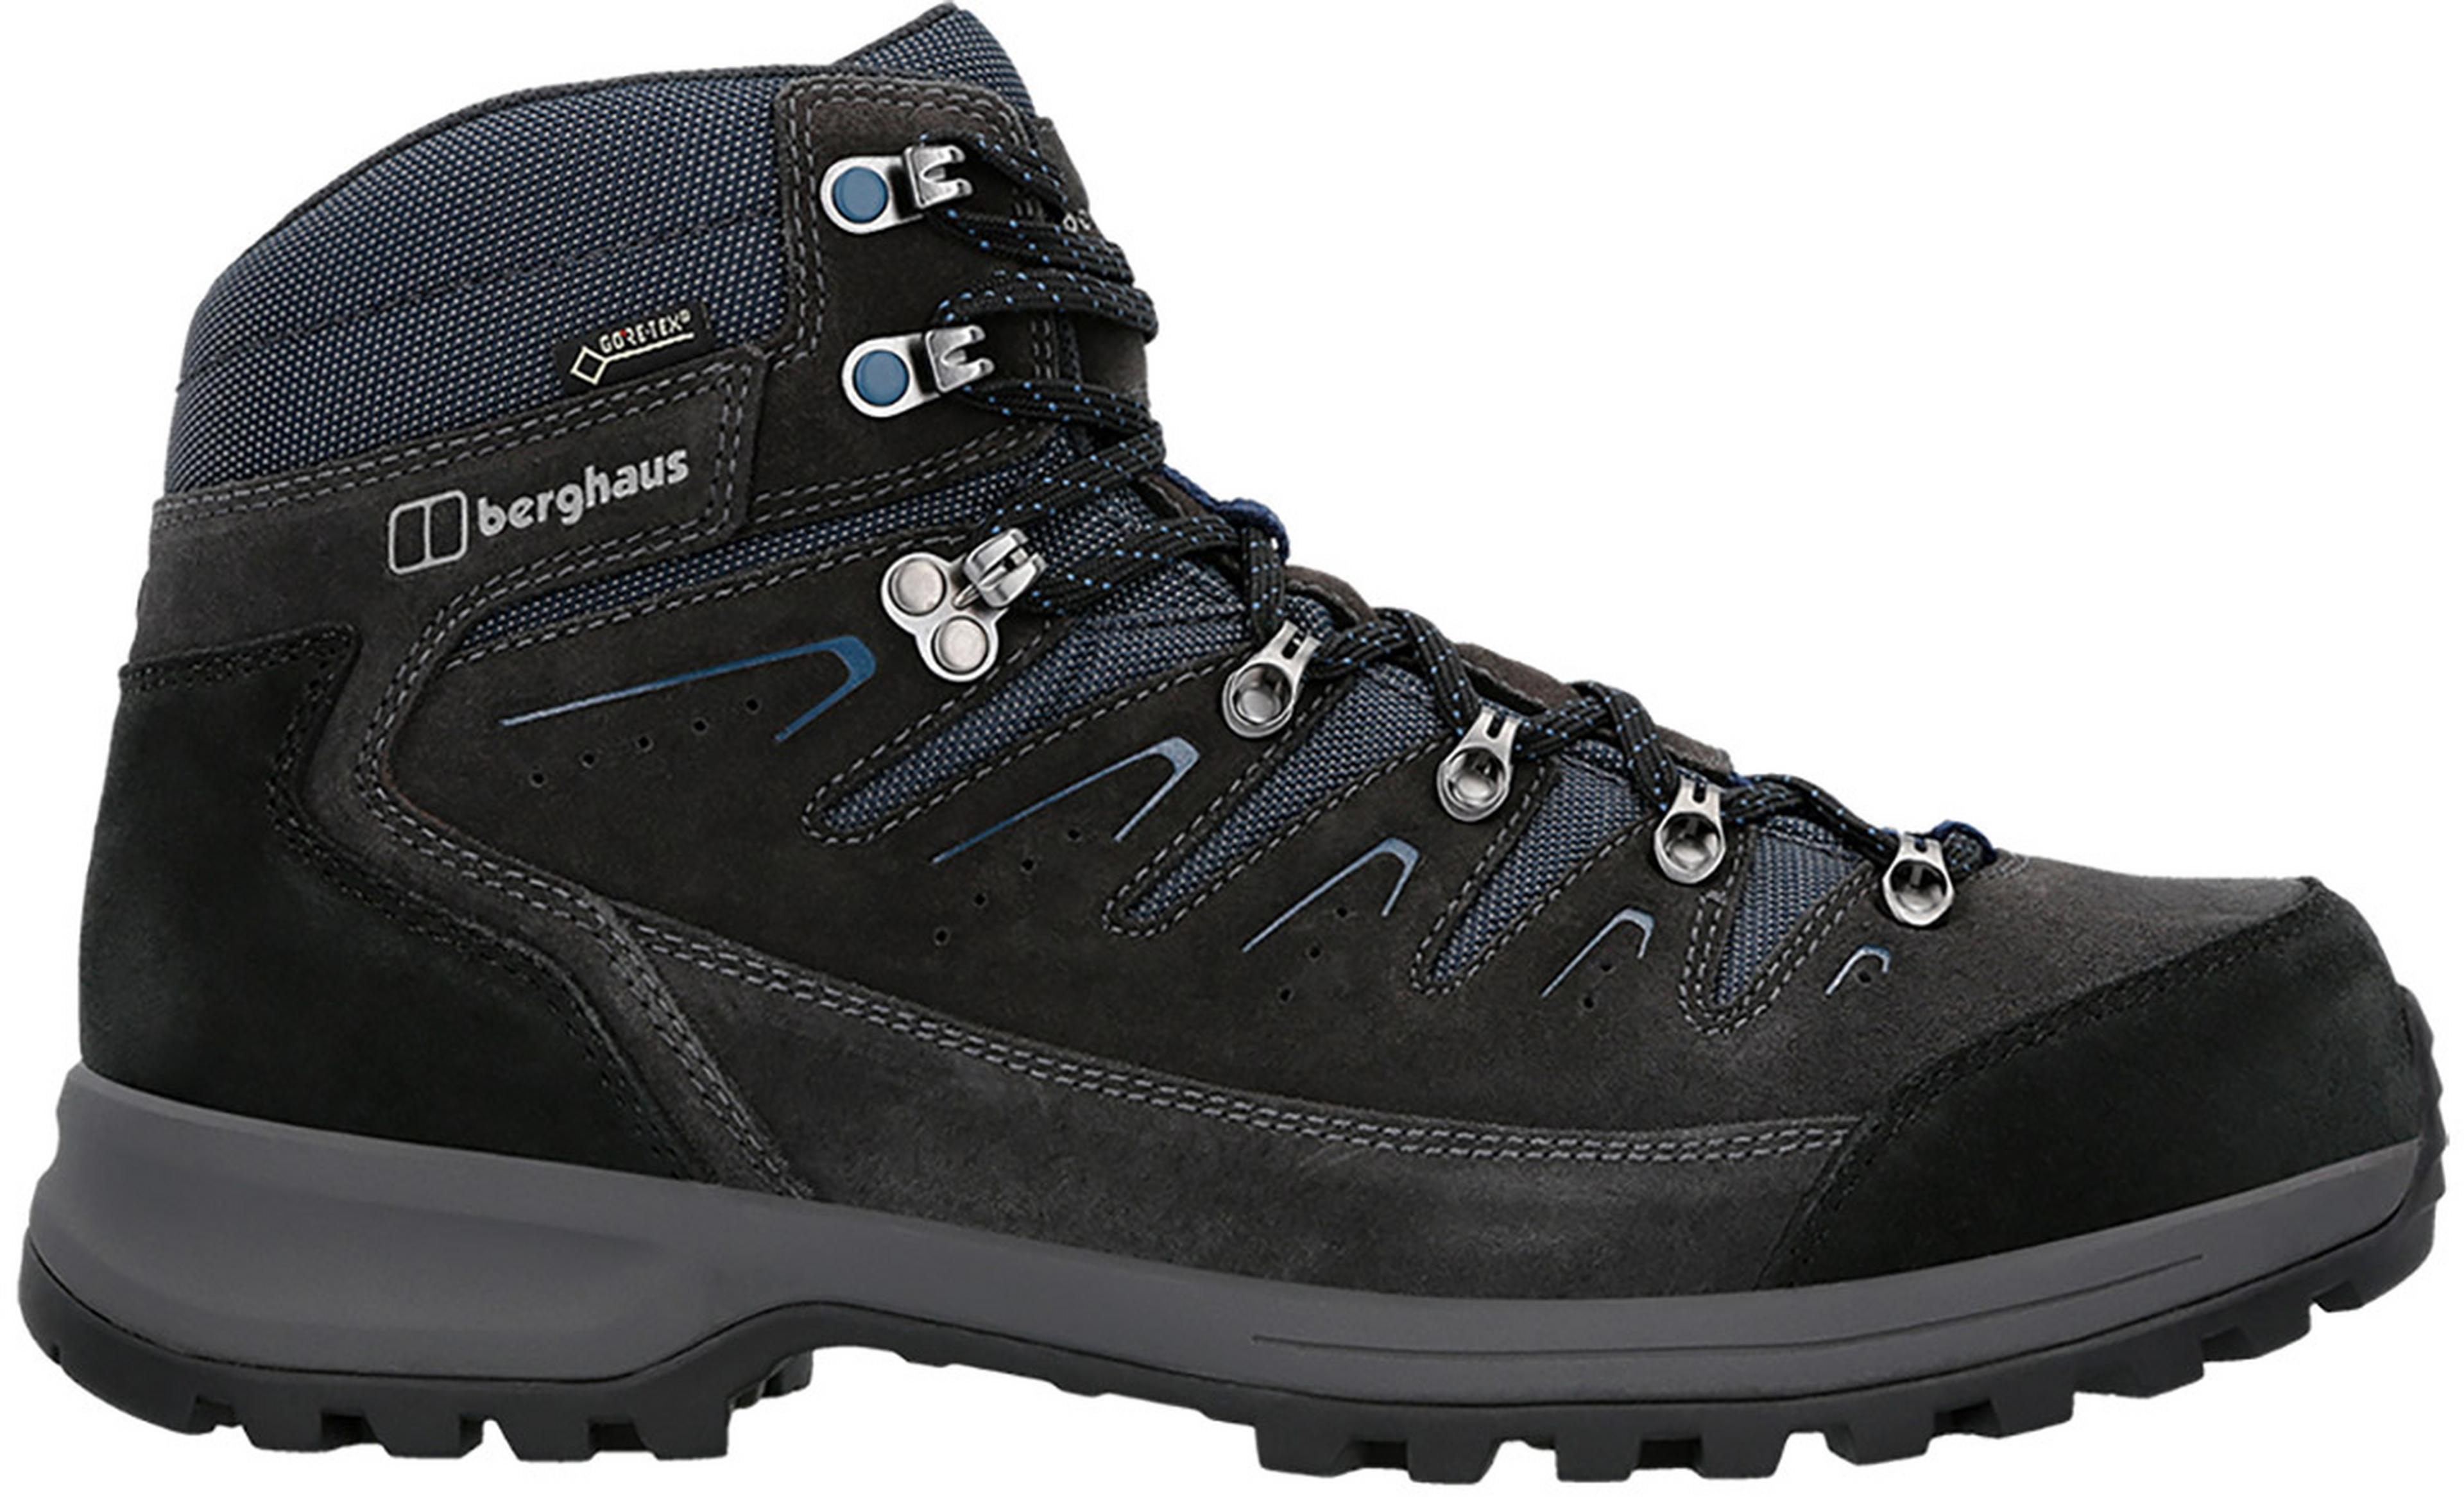 Berghaus Explorer Trek GORE-TEX Walking Boots